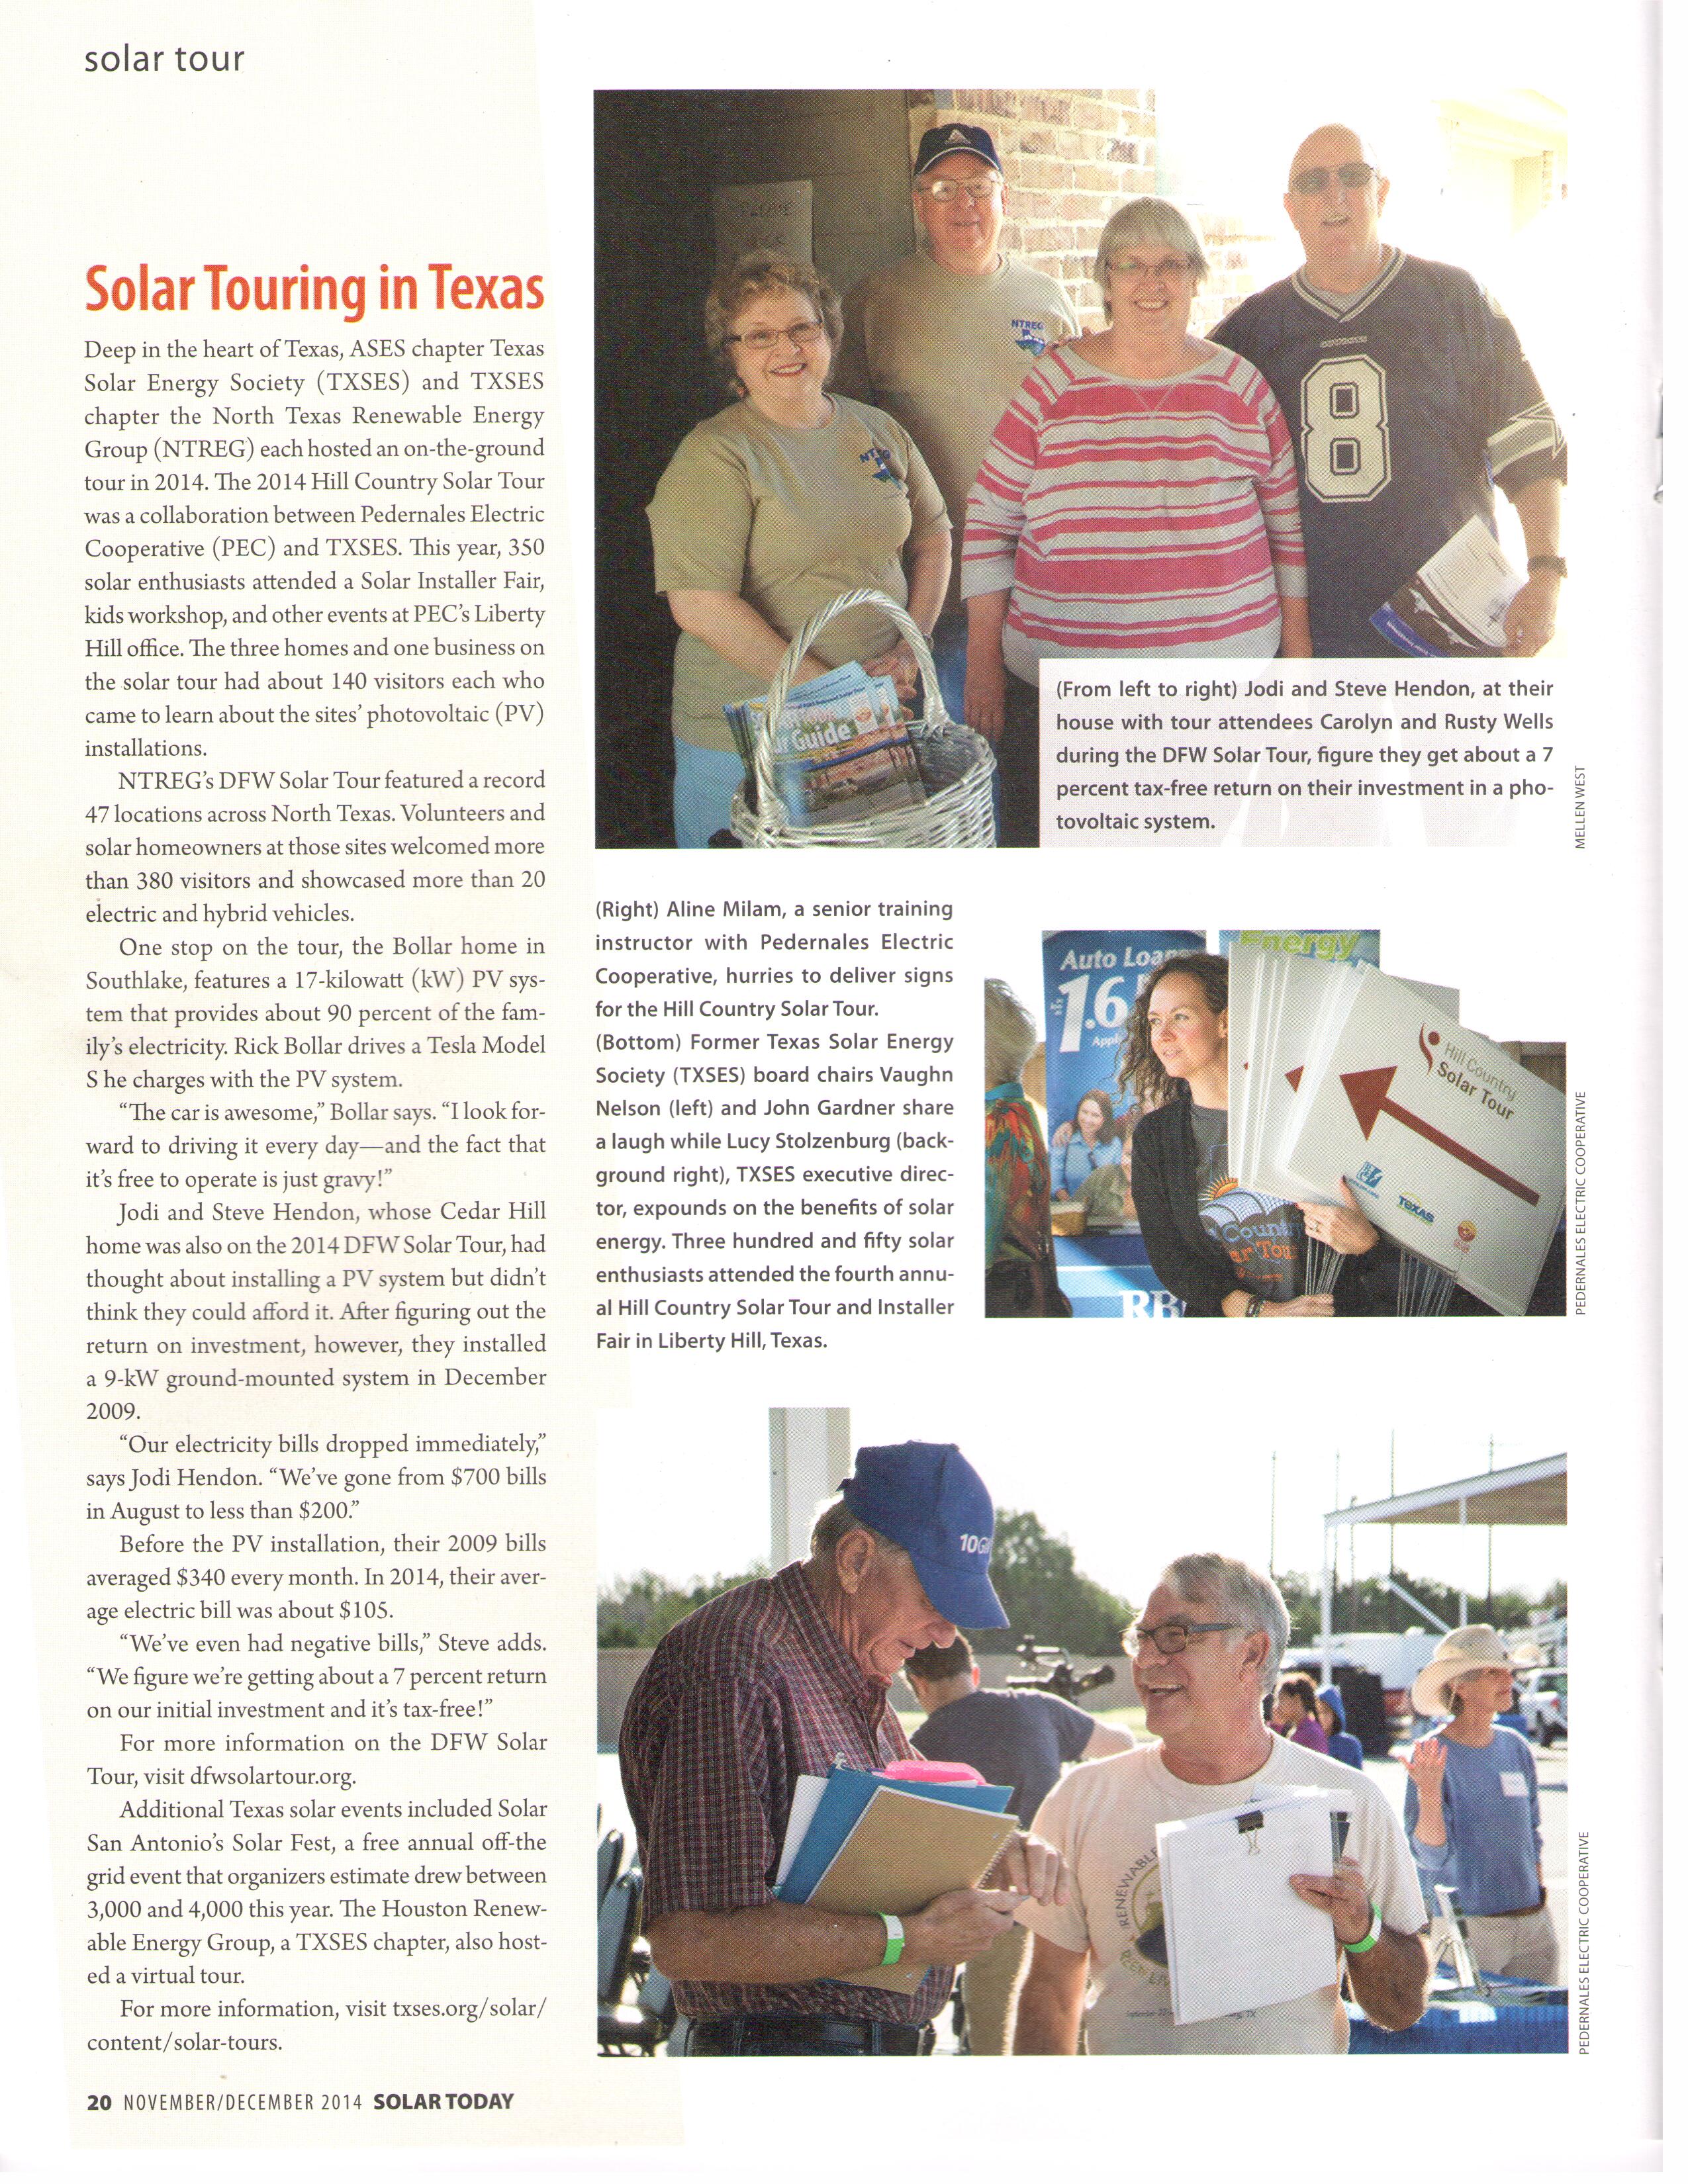 Solar Today Solar Tour in Texas.jpeg